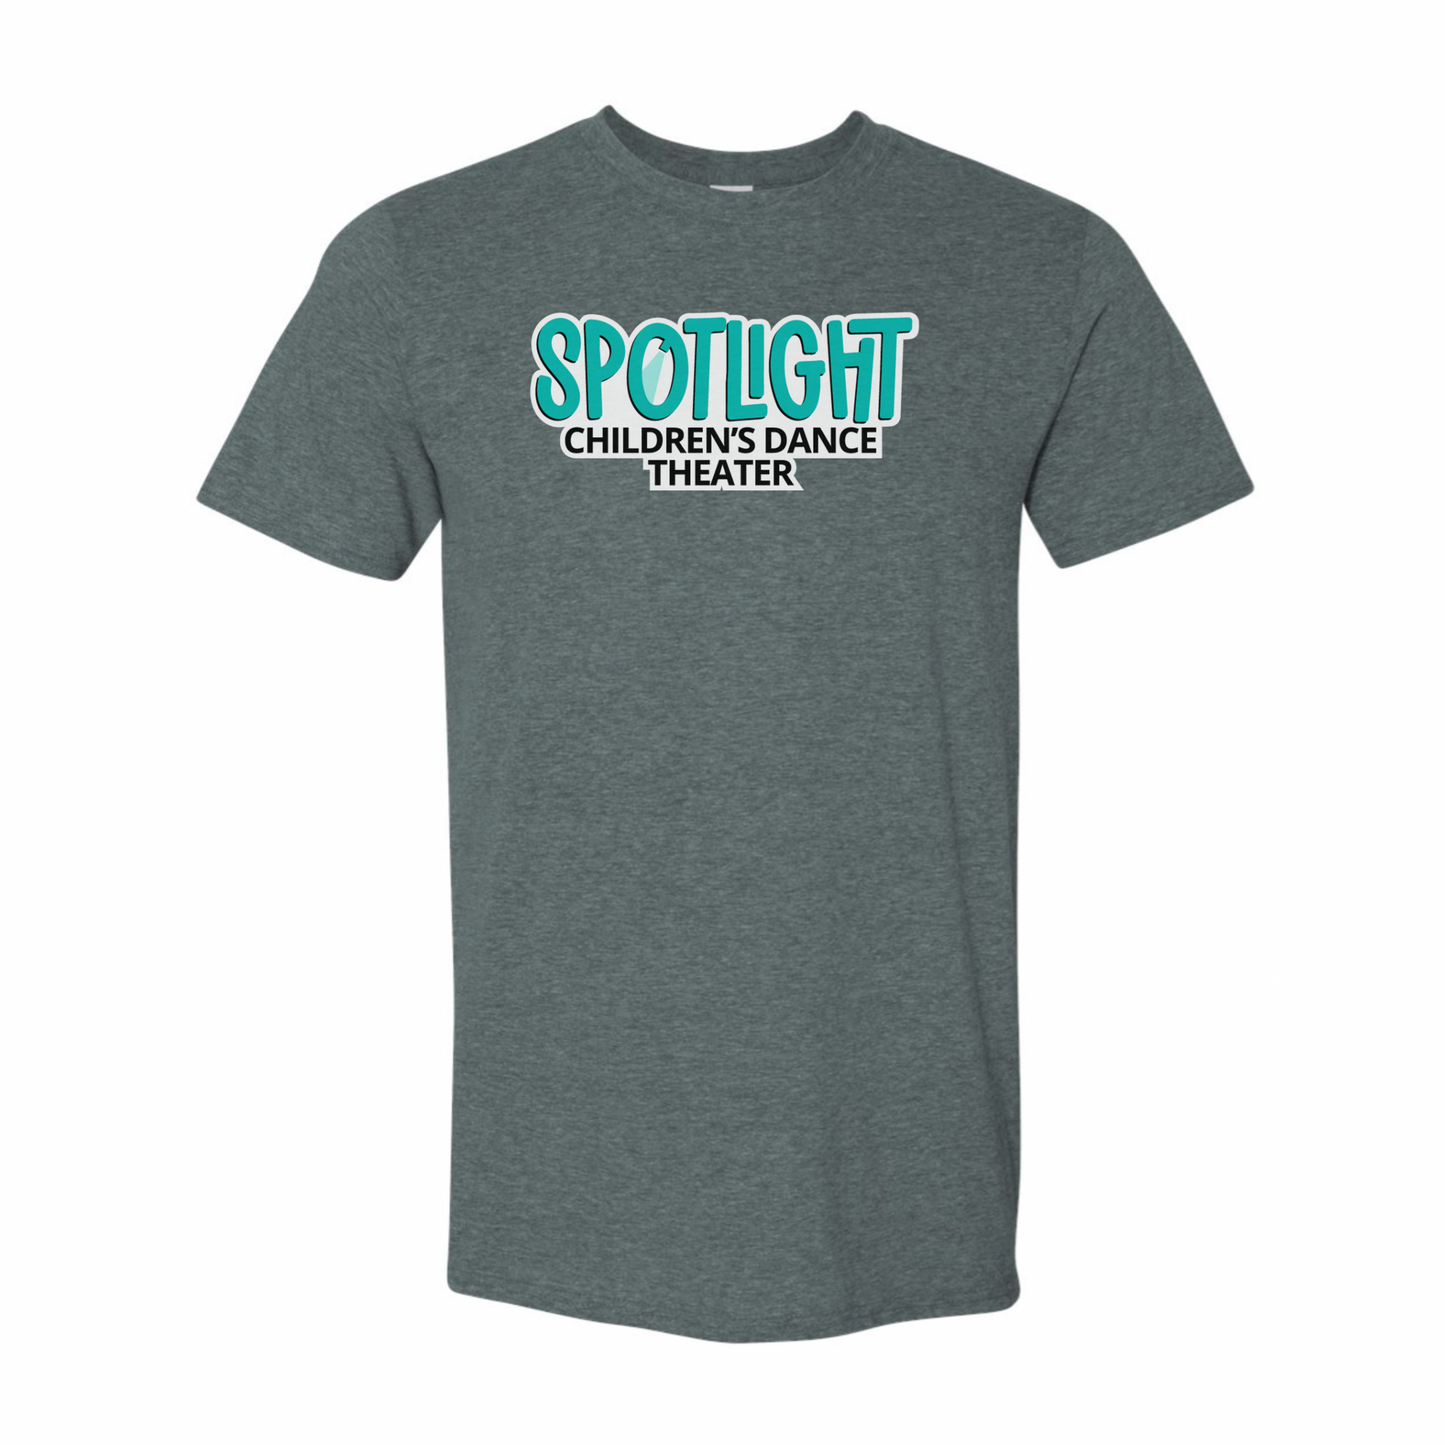 Spotlight Theater T-shirt